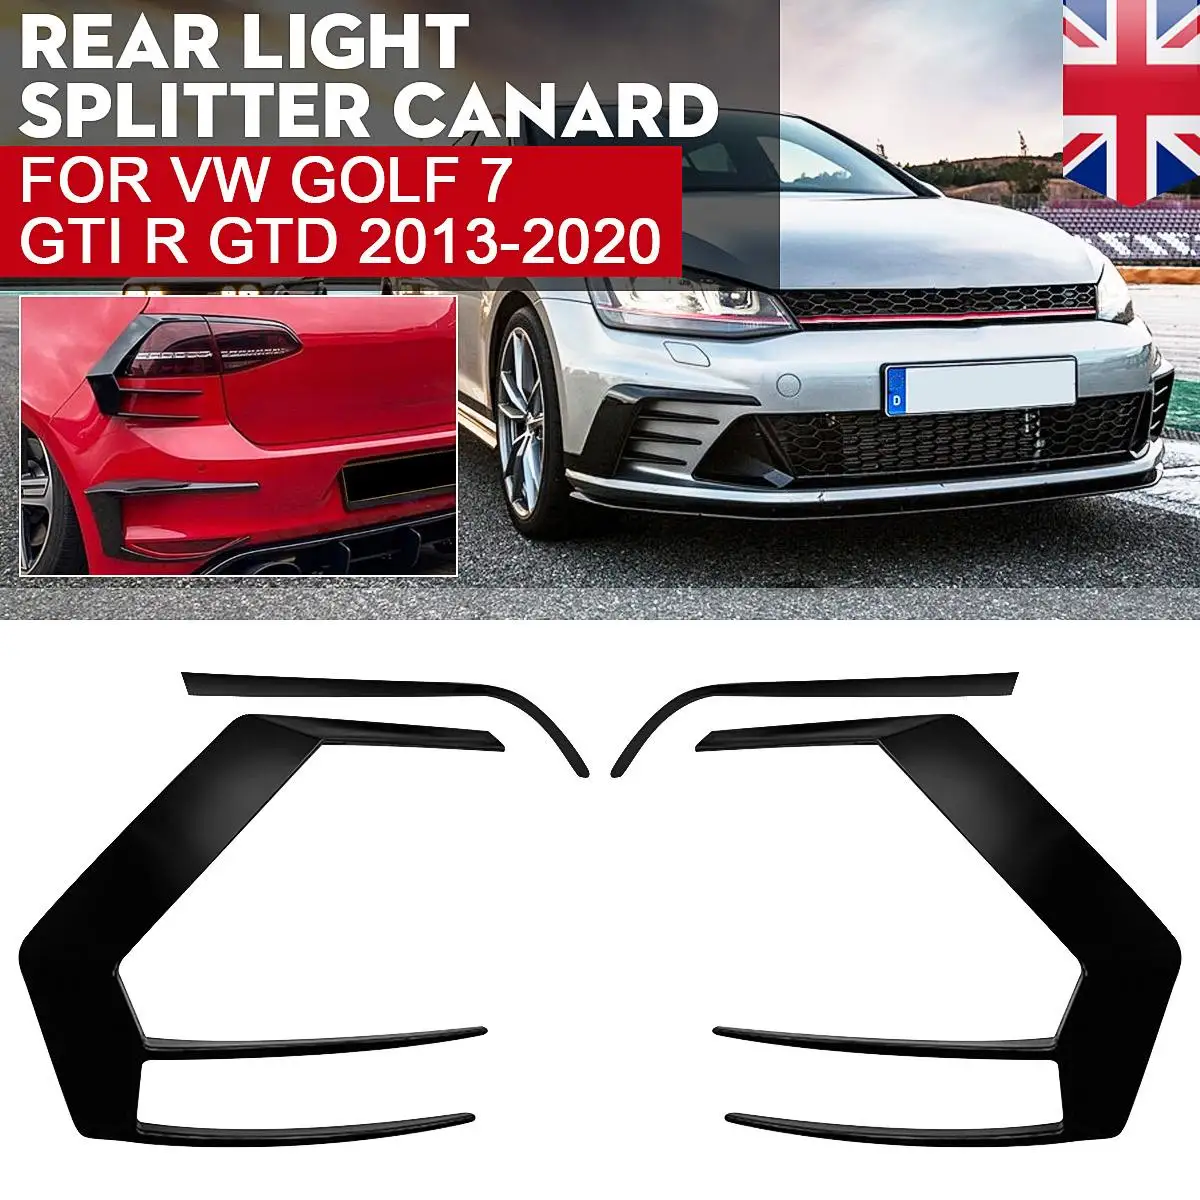 For VW Golf 7 GTI R GTD 2013-2020 Rear Bumper Lamp Trim Black Tail Light Cover Frame Strip Canard Splitter Spoiler Brow